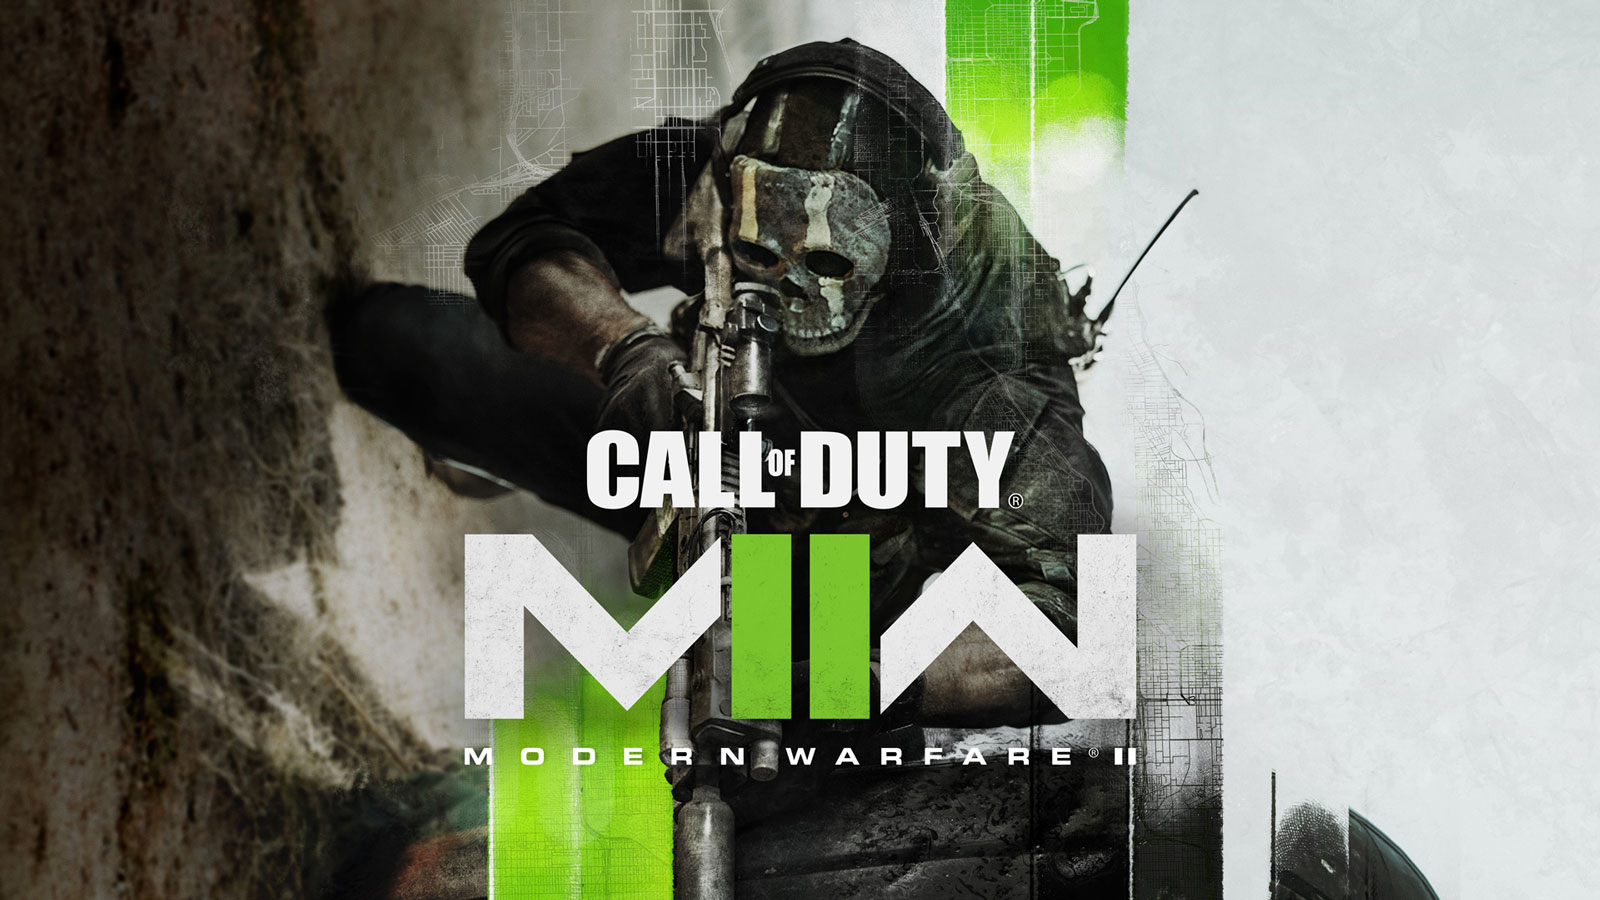 The GeForce RTX Call of Duty: Modern Warfare Bundle Is Here